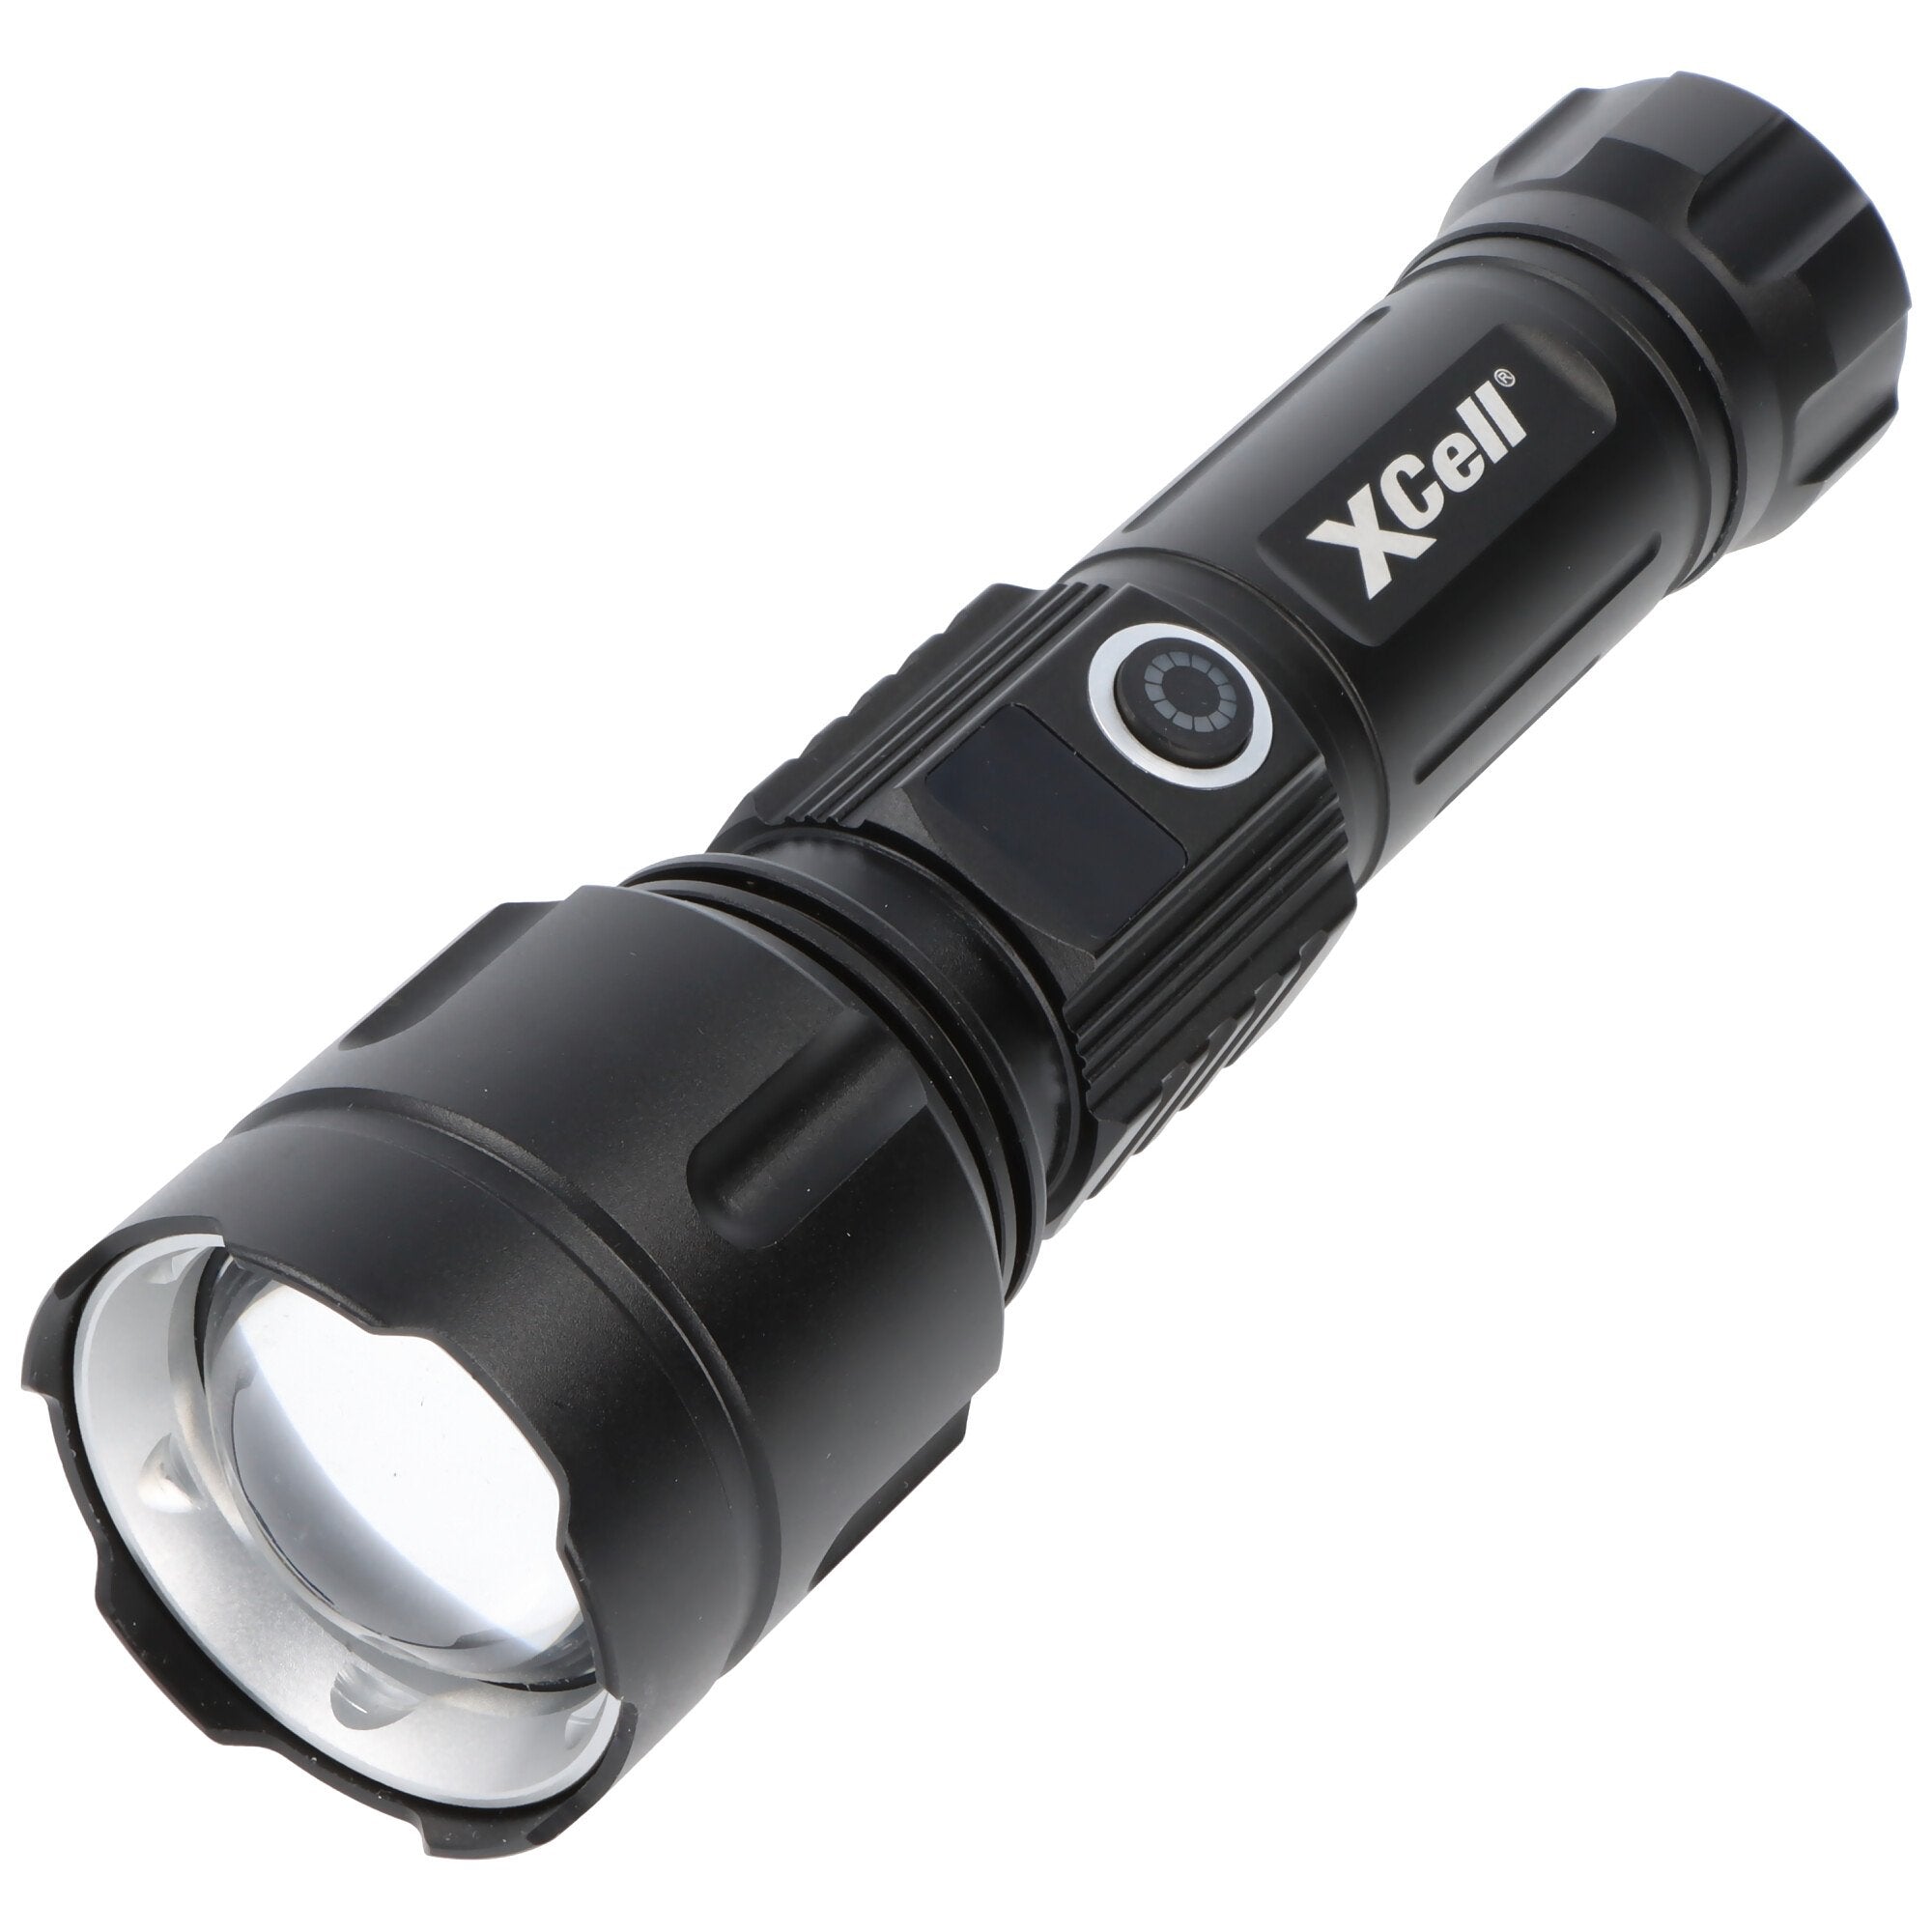 LUNALUX LEP flashlight focusable, 1000 lumens, beam range up to 1200 meters, including 26650 Li-Ion